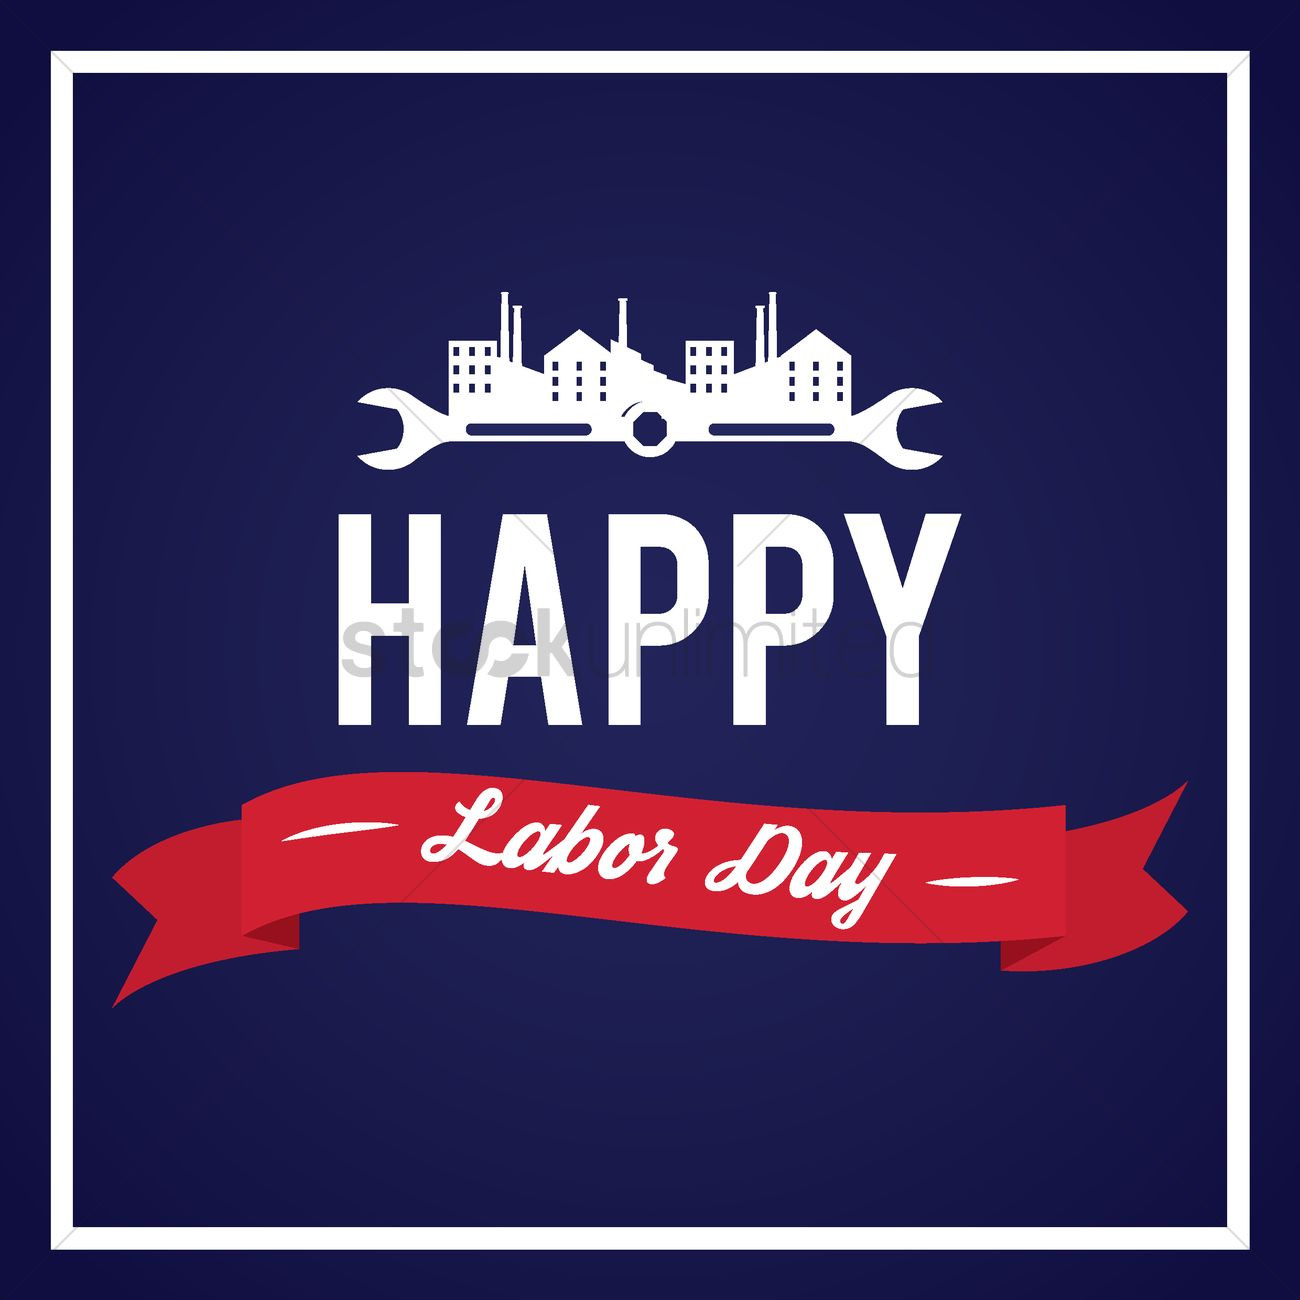 Happy Labor Day Quotes
 Happy labor day design Vector Image